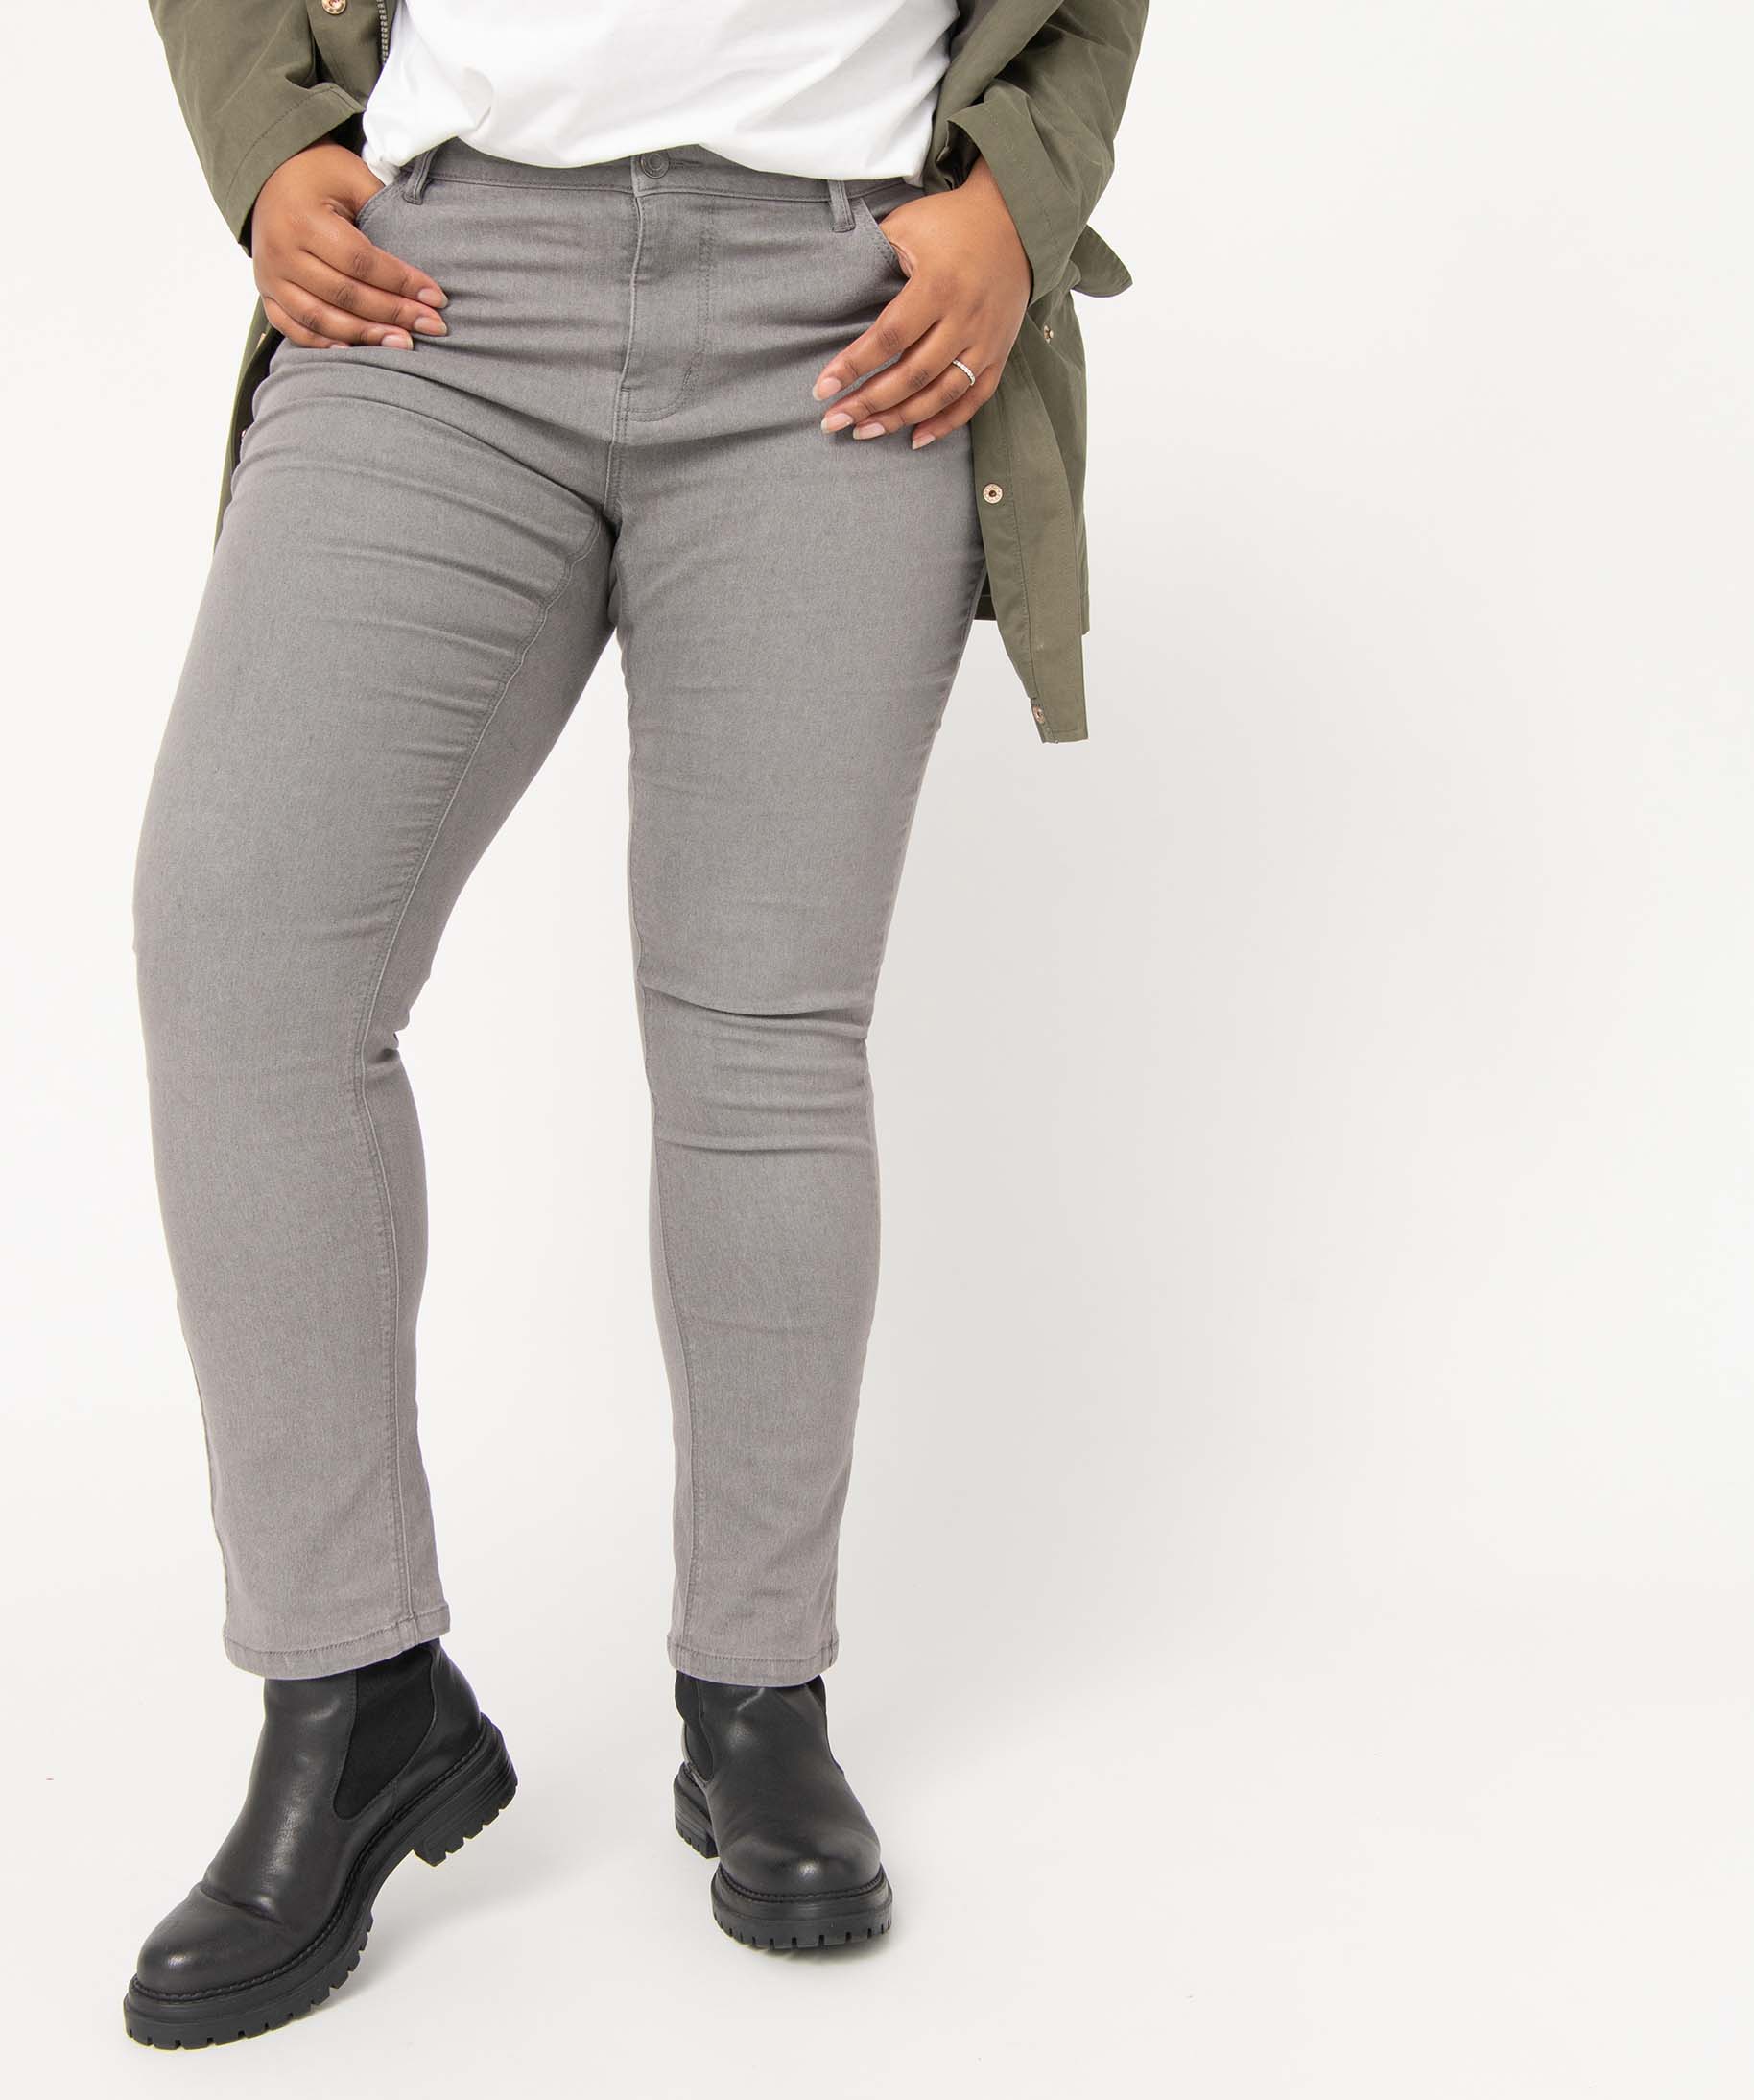 jean femme grande taille coupe regular gris pantalons et jeans